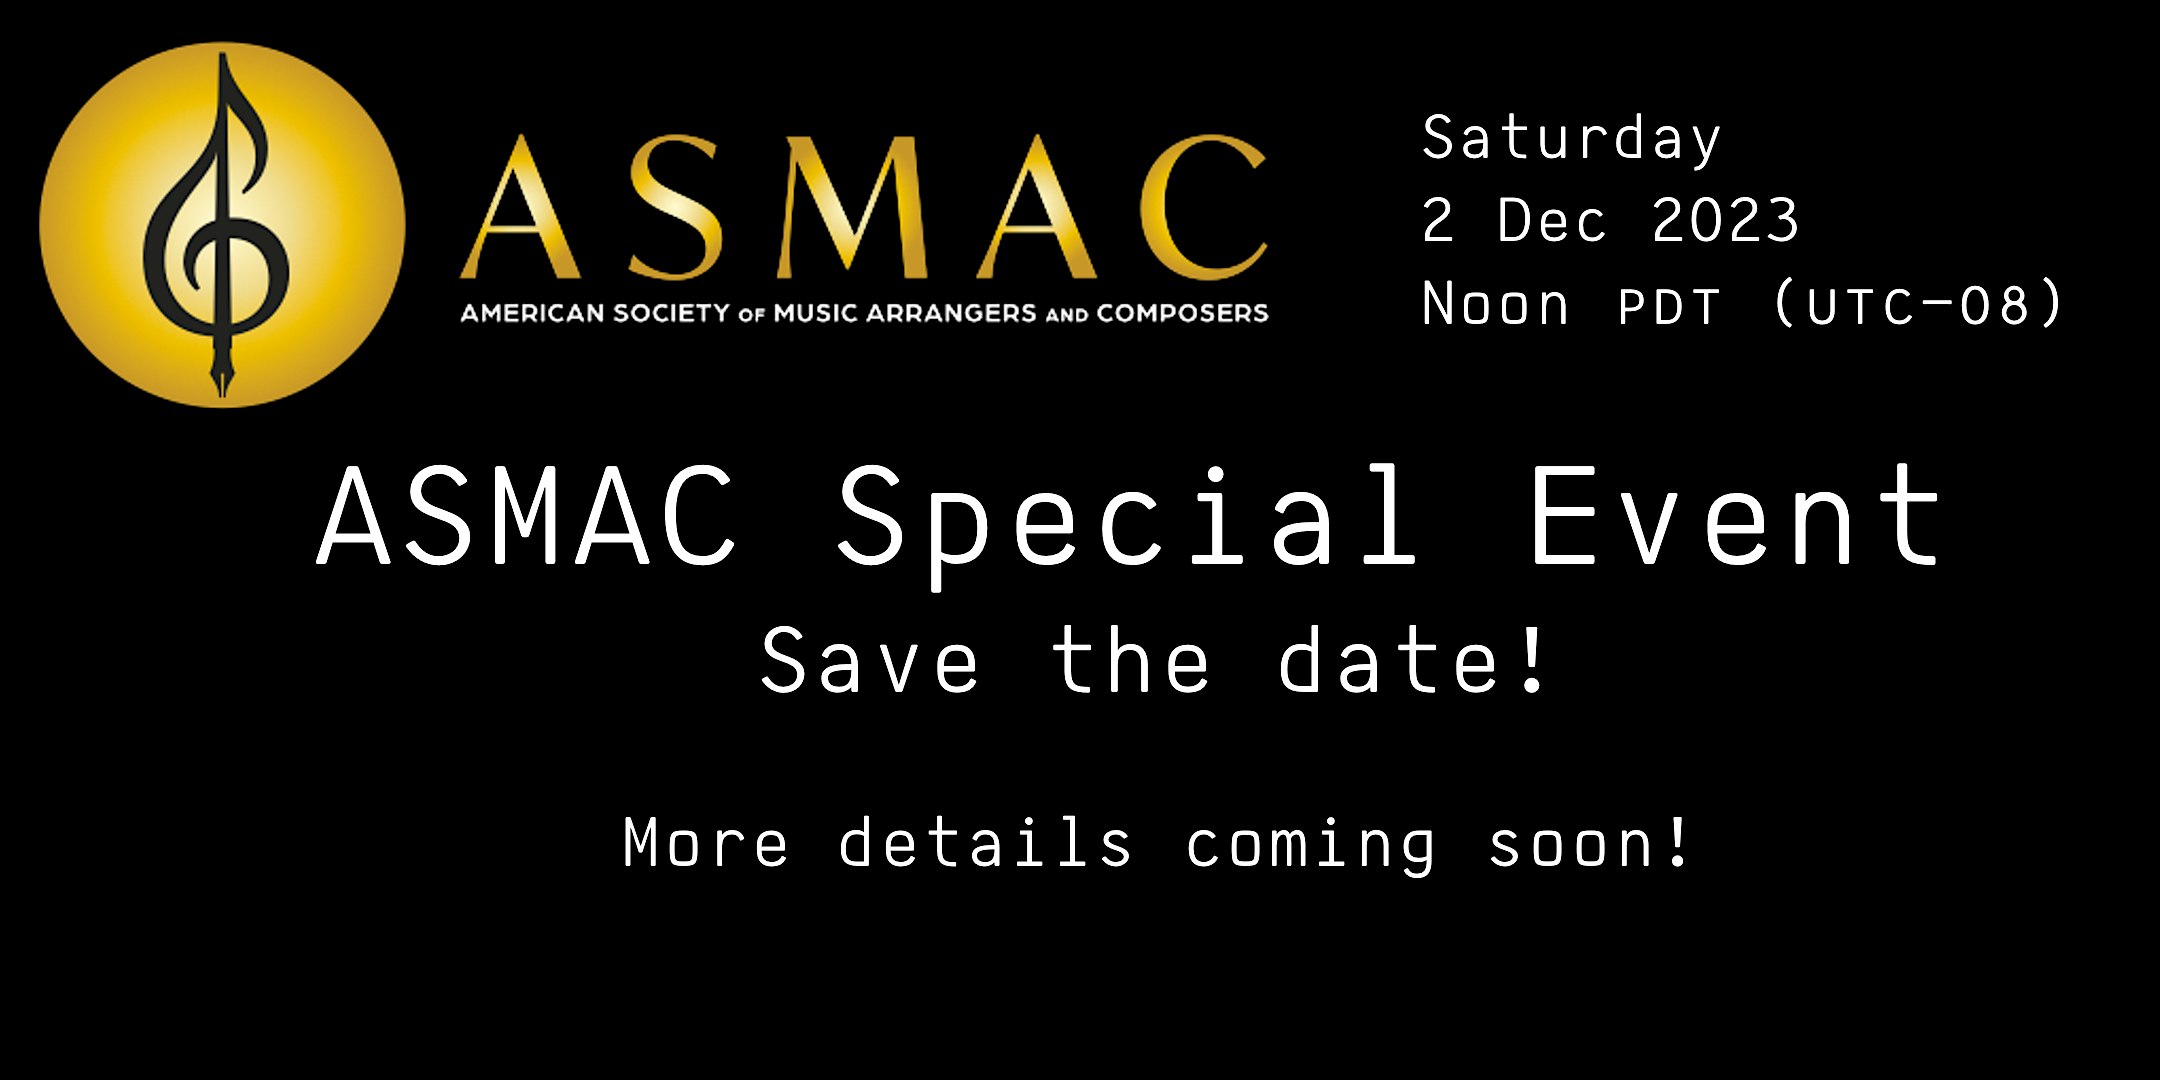 ASMAC presents … Details coming soon!